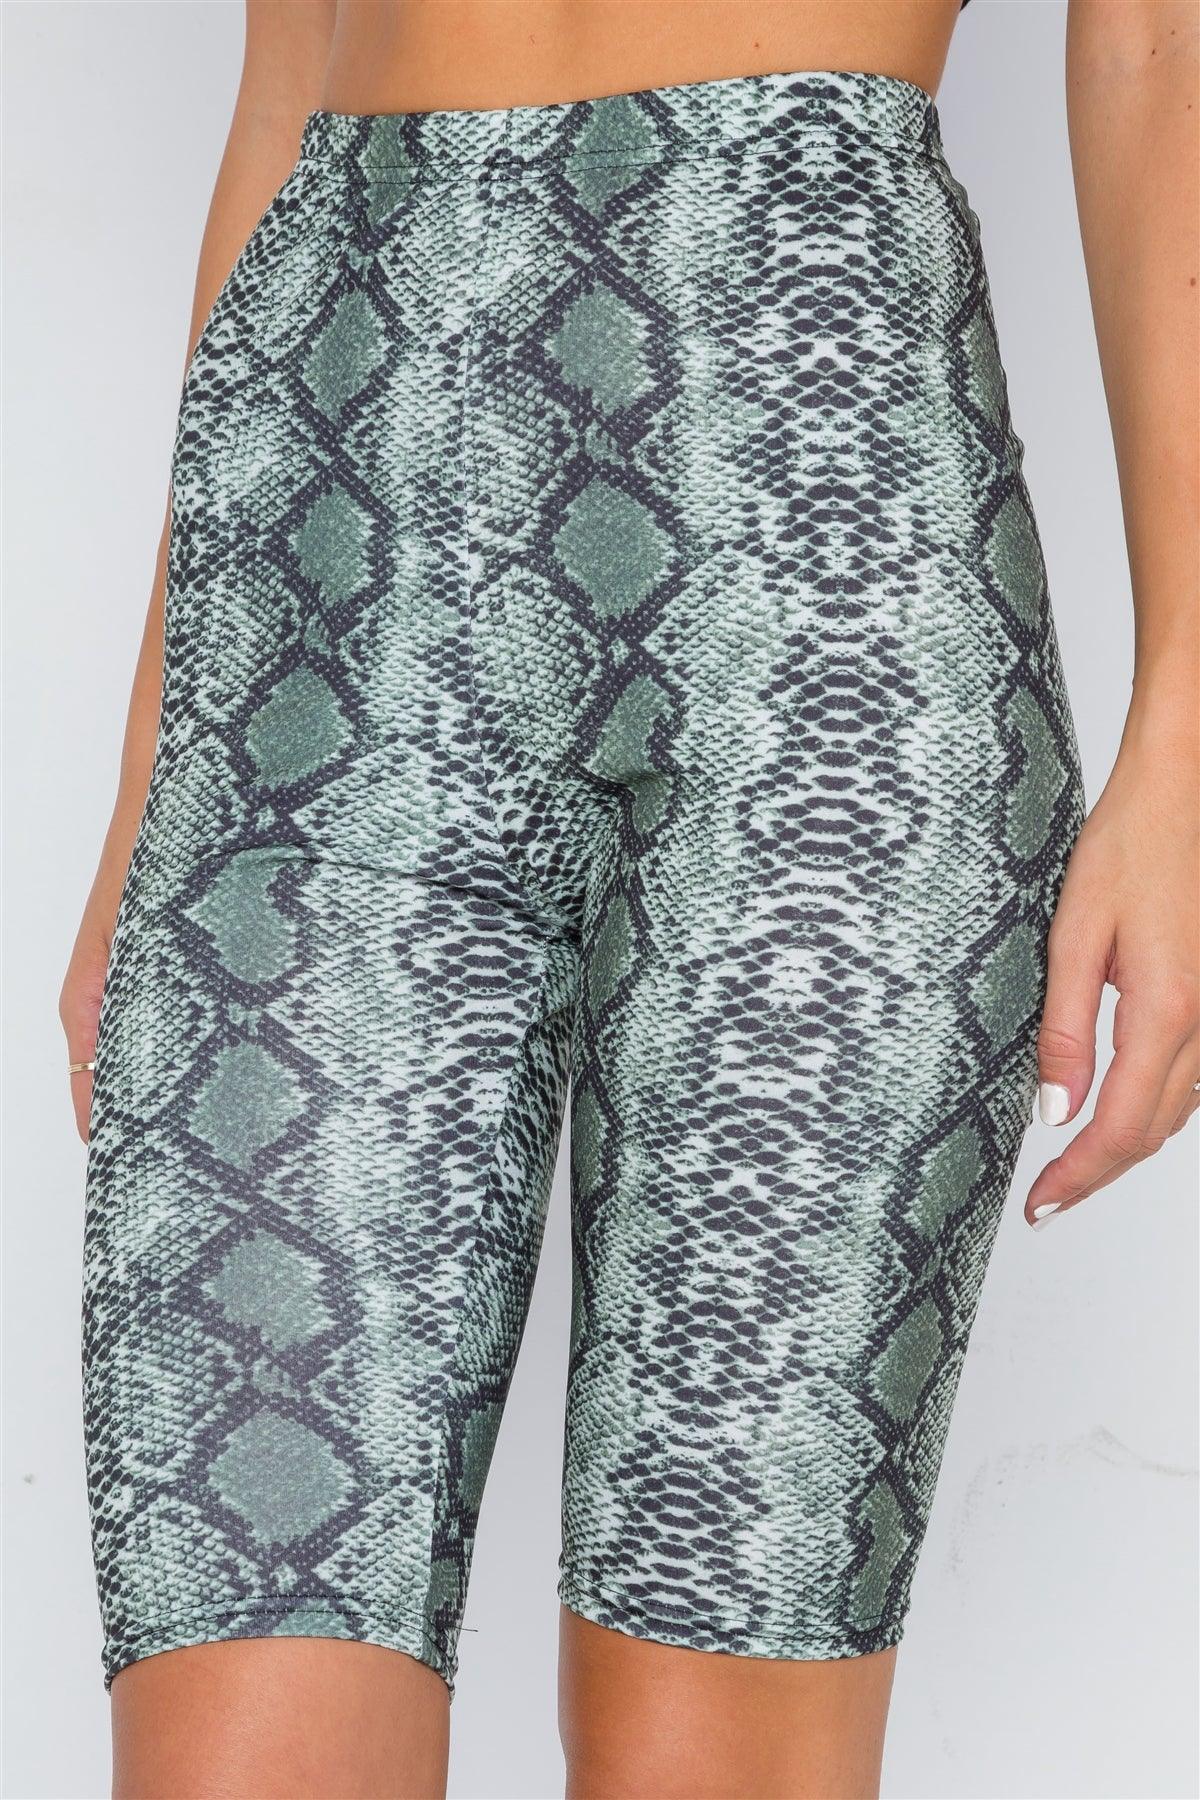 Olive Snake Print High-Waist Biker Shorts /1-2-2